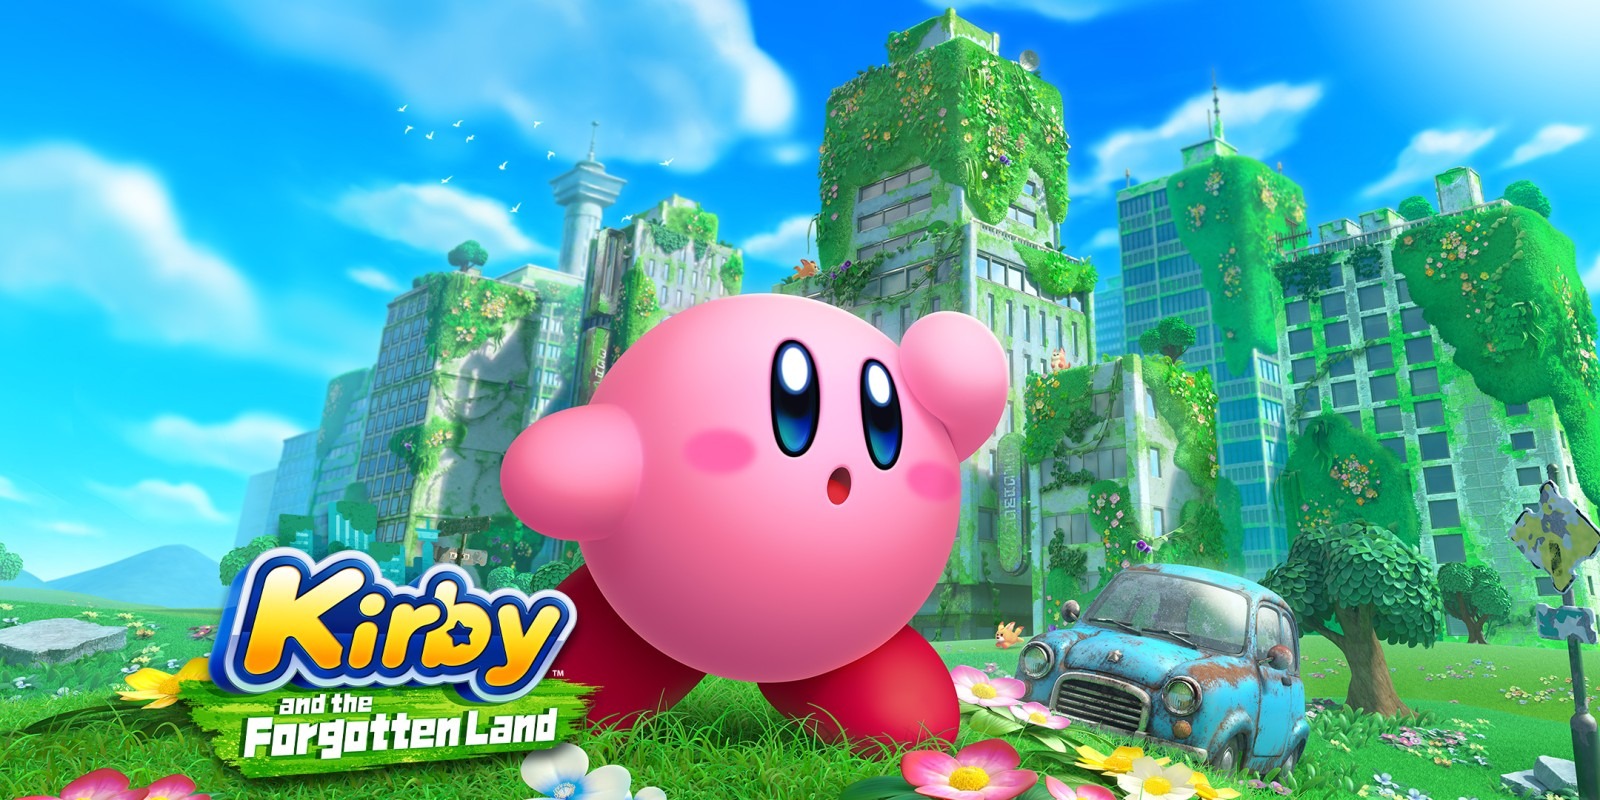 [Guia] Kirby and the Forgotten Land - Códigos "secretos" para desbloquear itens